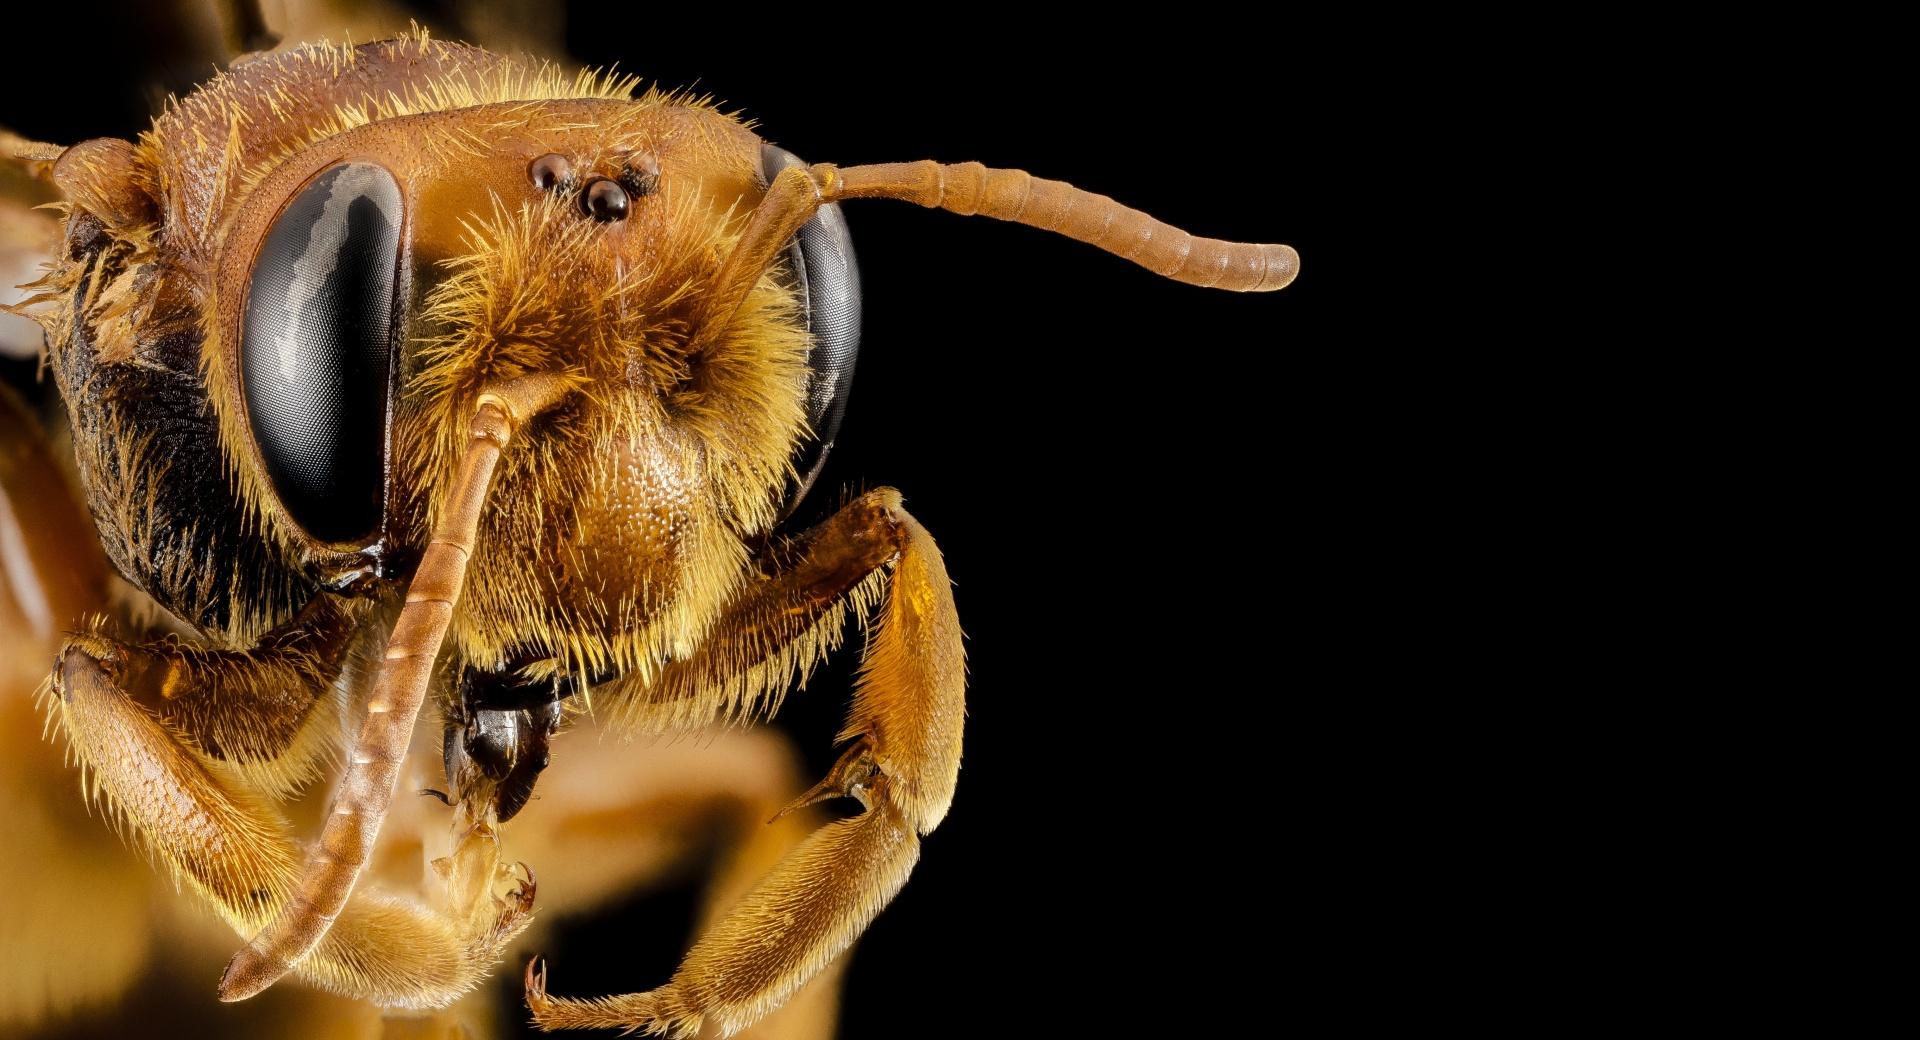 Andrena Bee Head Macro, Oman wallpapers HD quality